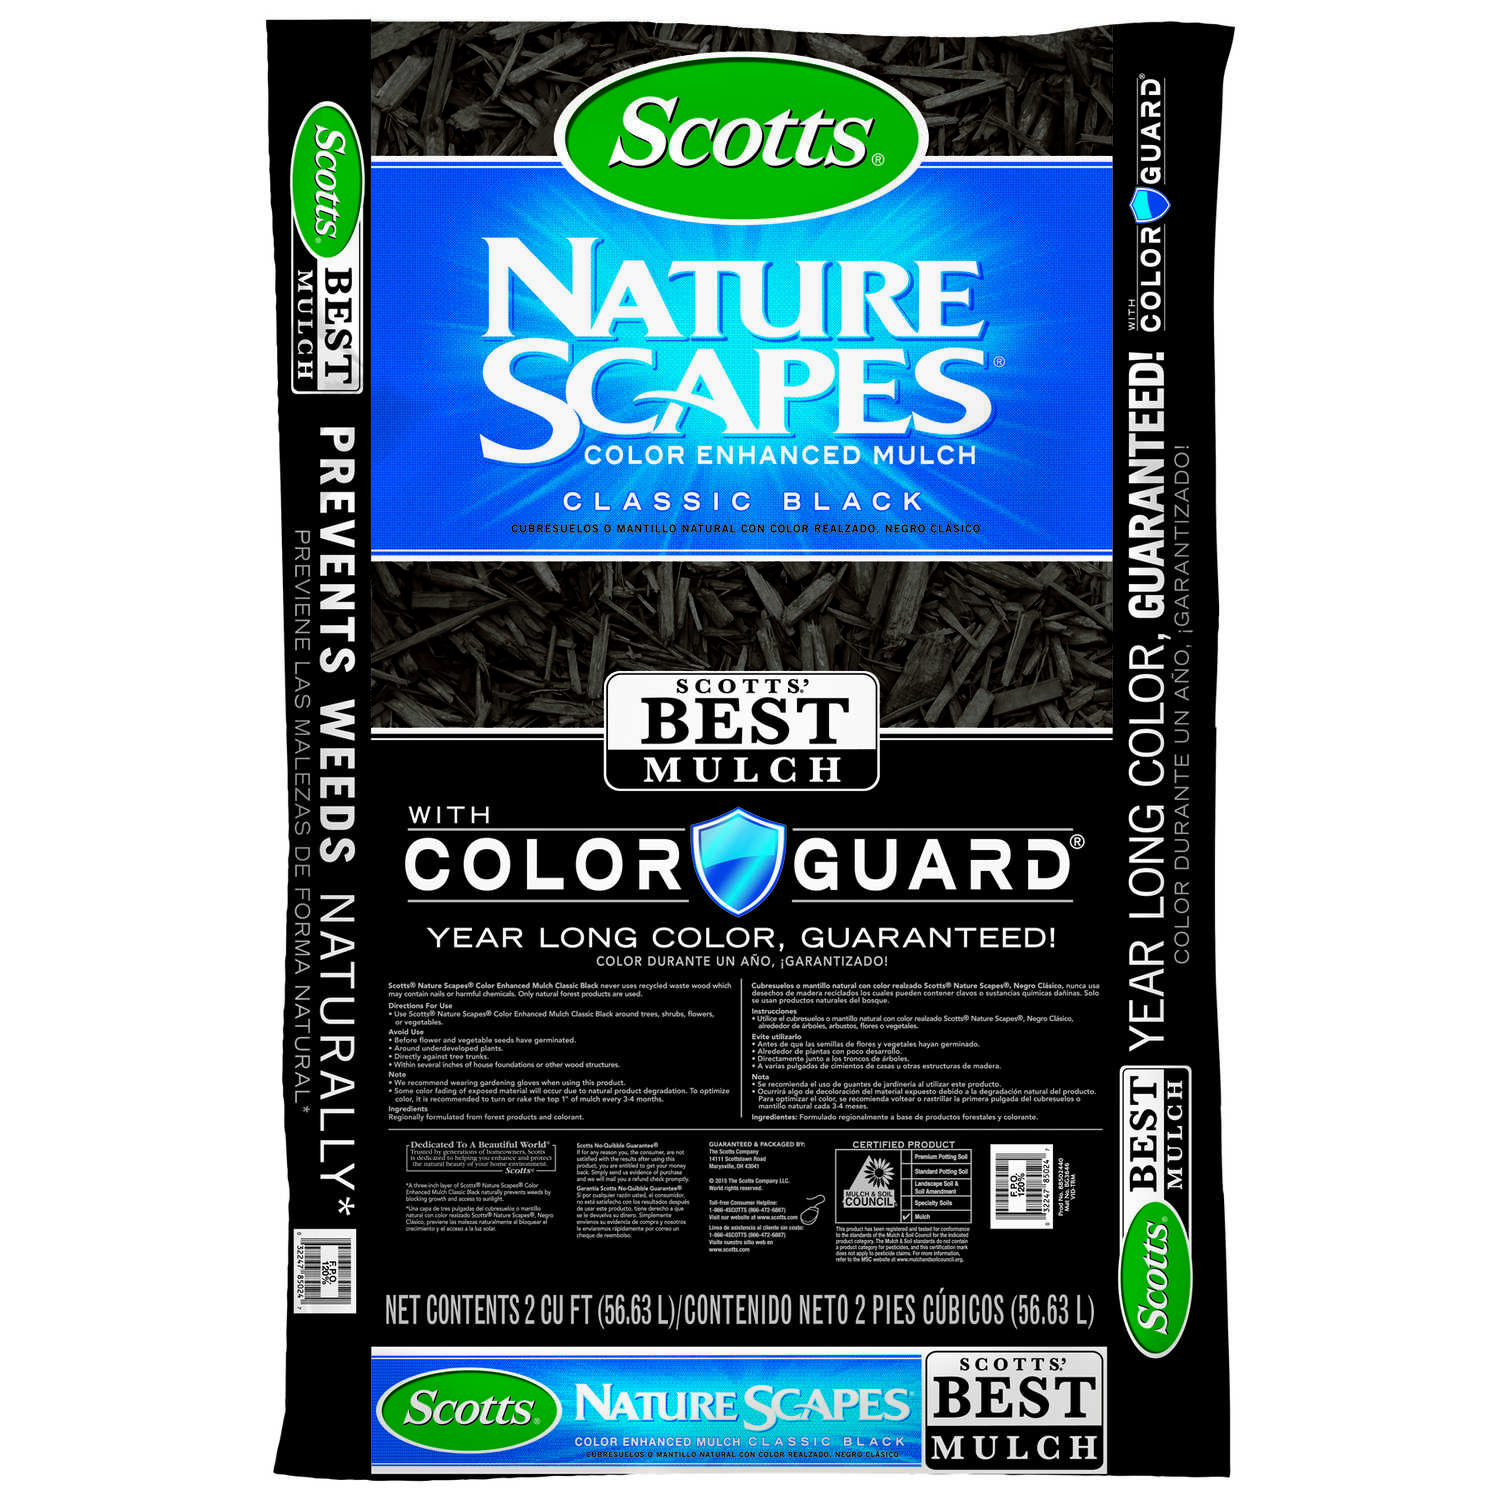 Scotts Nature Scapes Classic Black Bark ColorEnhanced